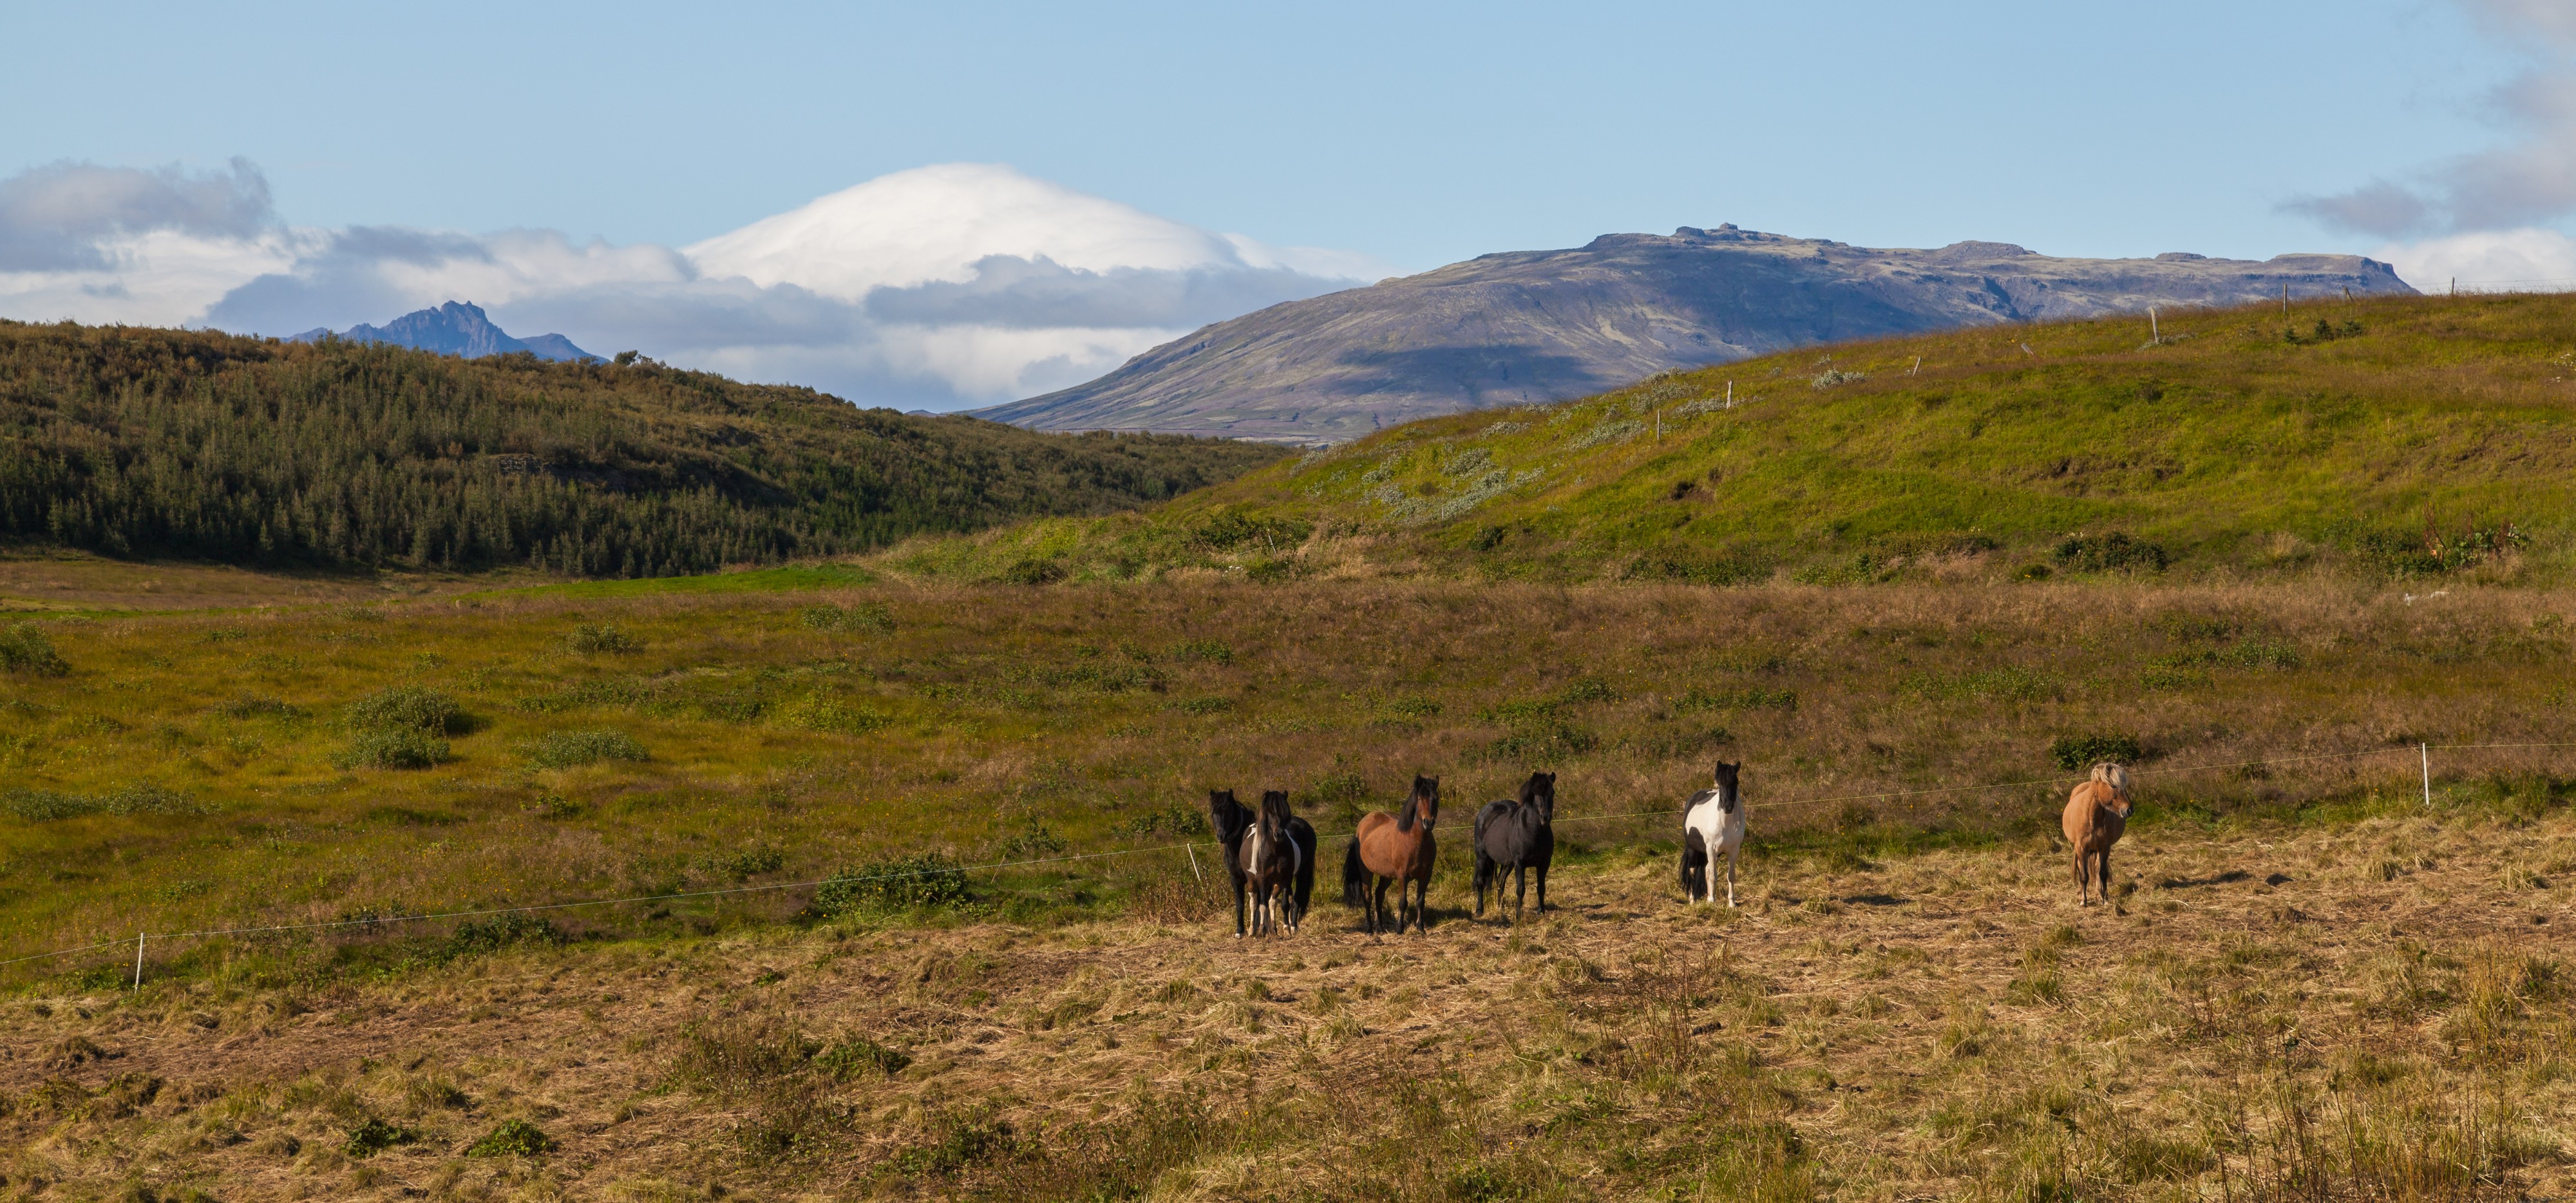 Caballos cerca de Skálholt, Suðurland, Islandia, 2014-08-16, DD 133